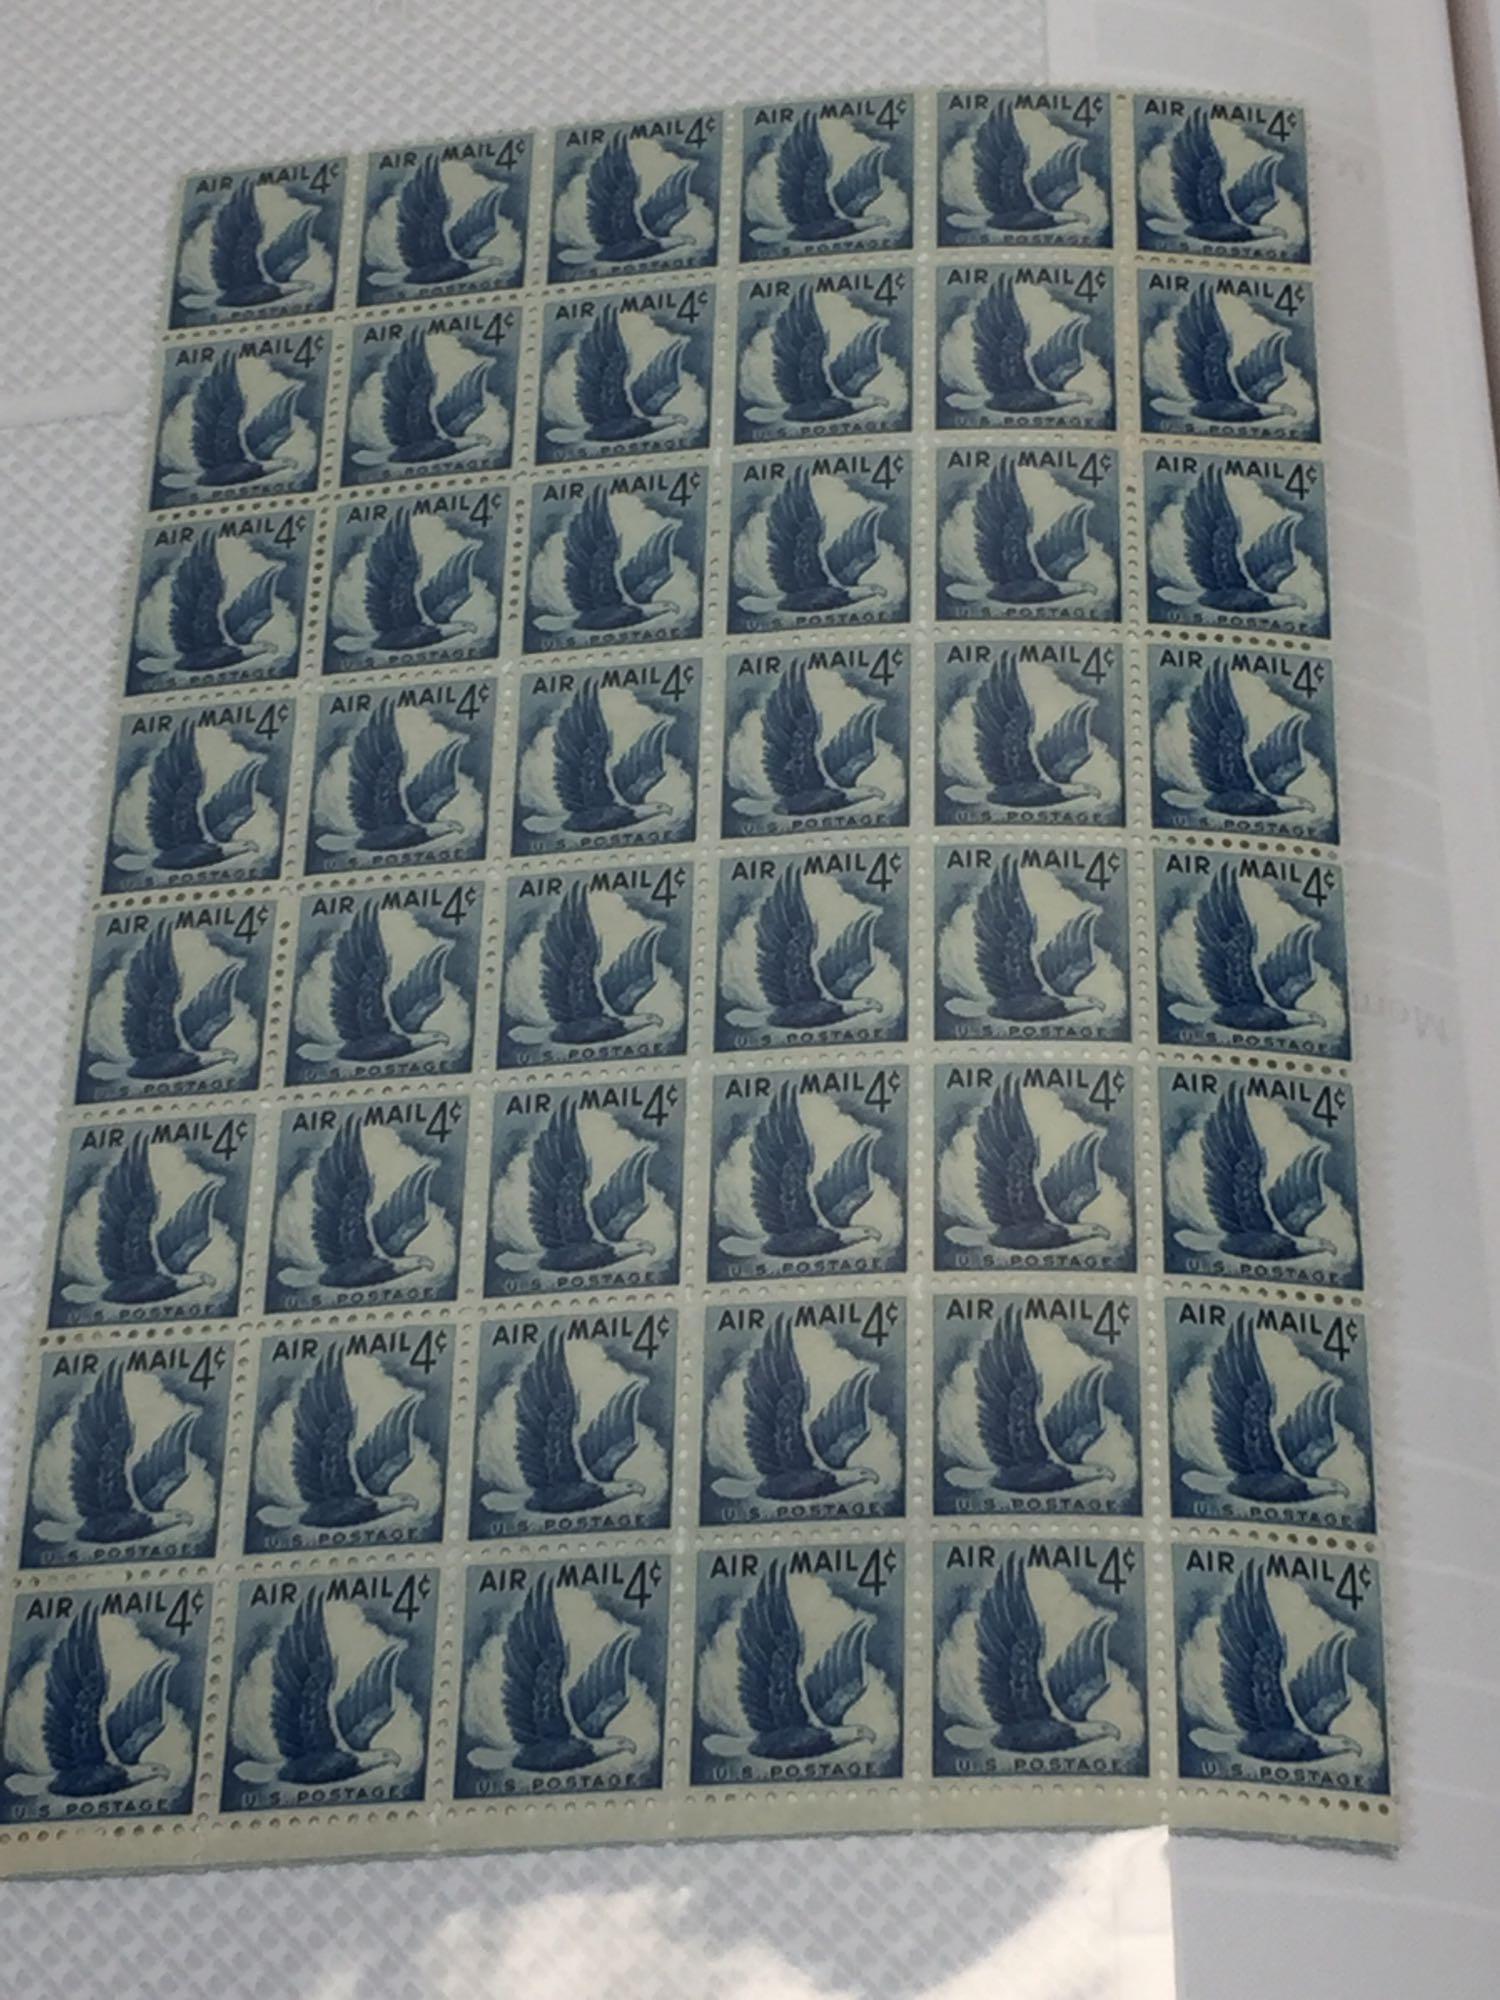 Album of Vintage US Stamp Sheets, 68 Full Pages